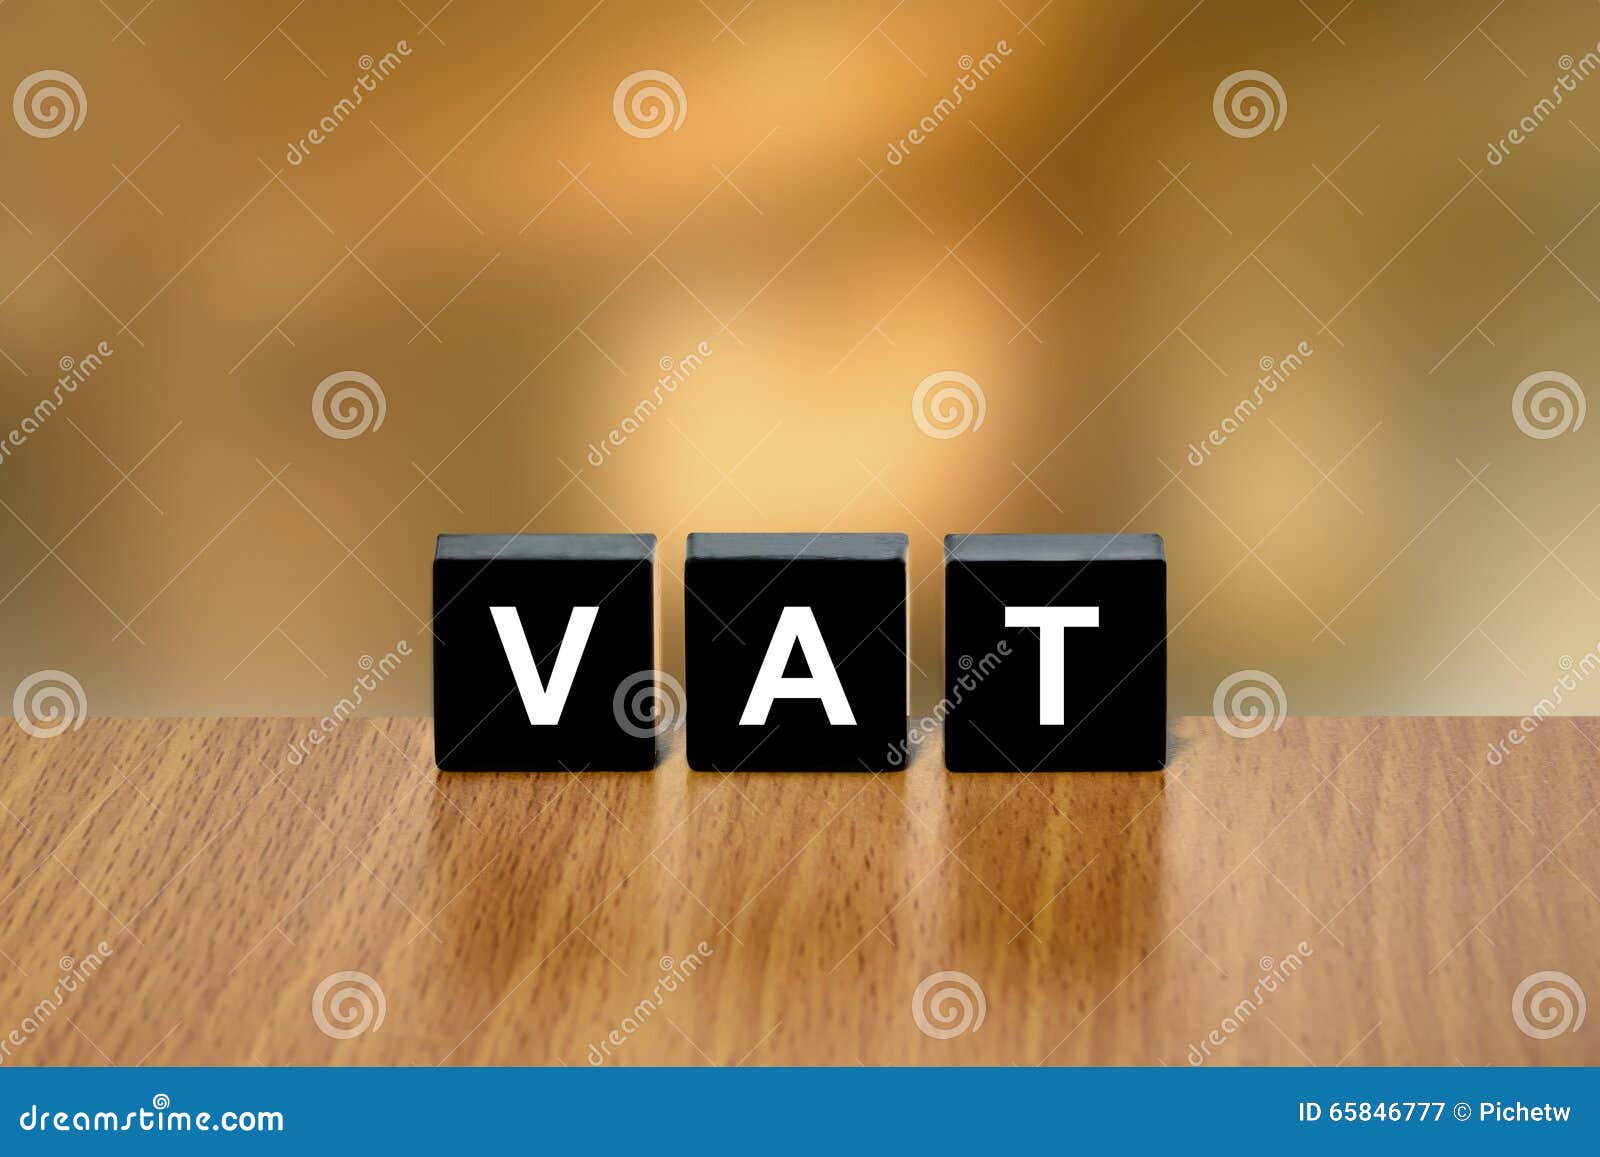 vat or value added tax on black block